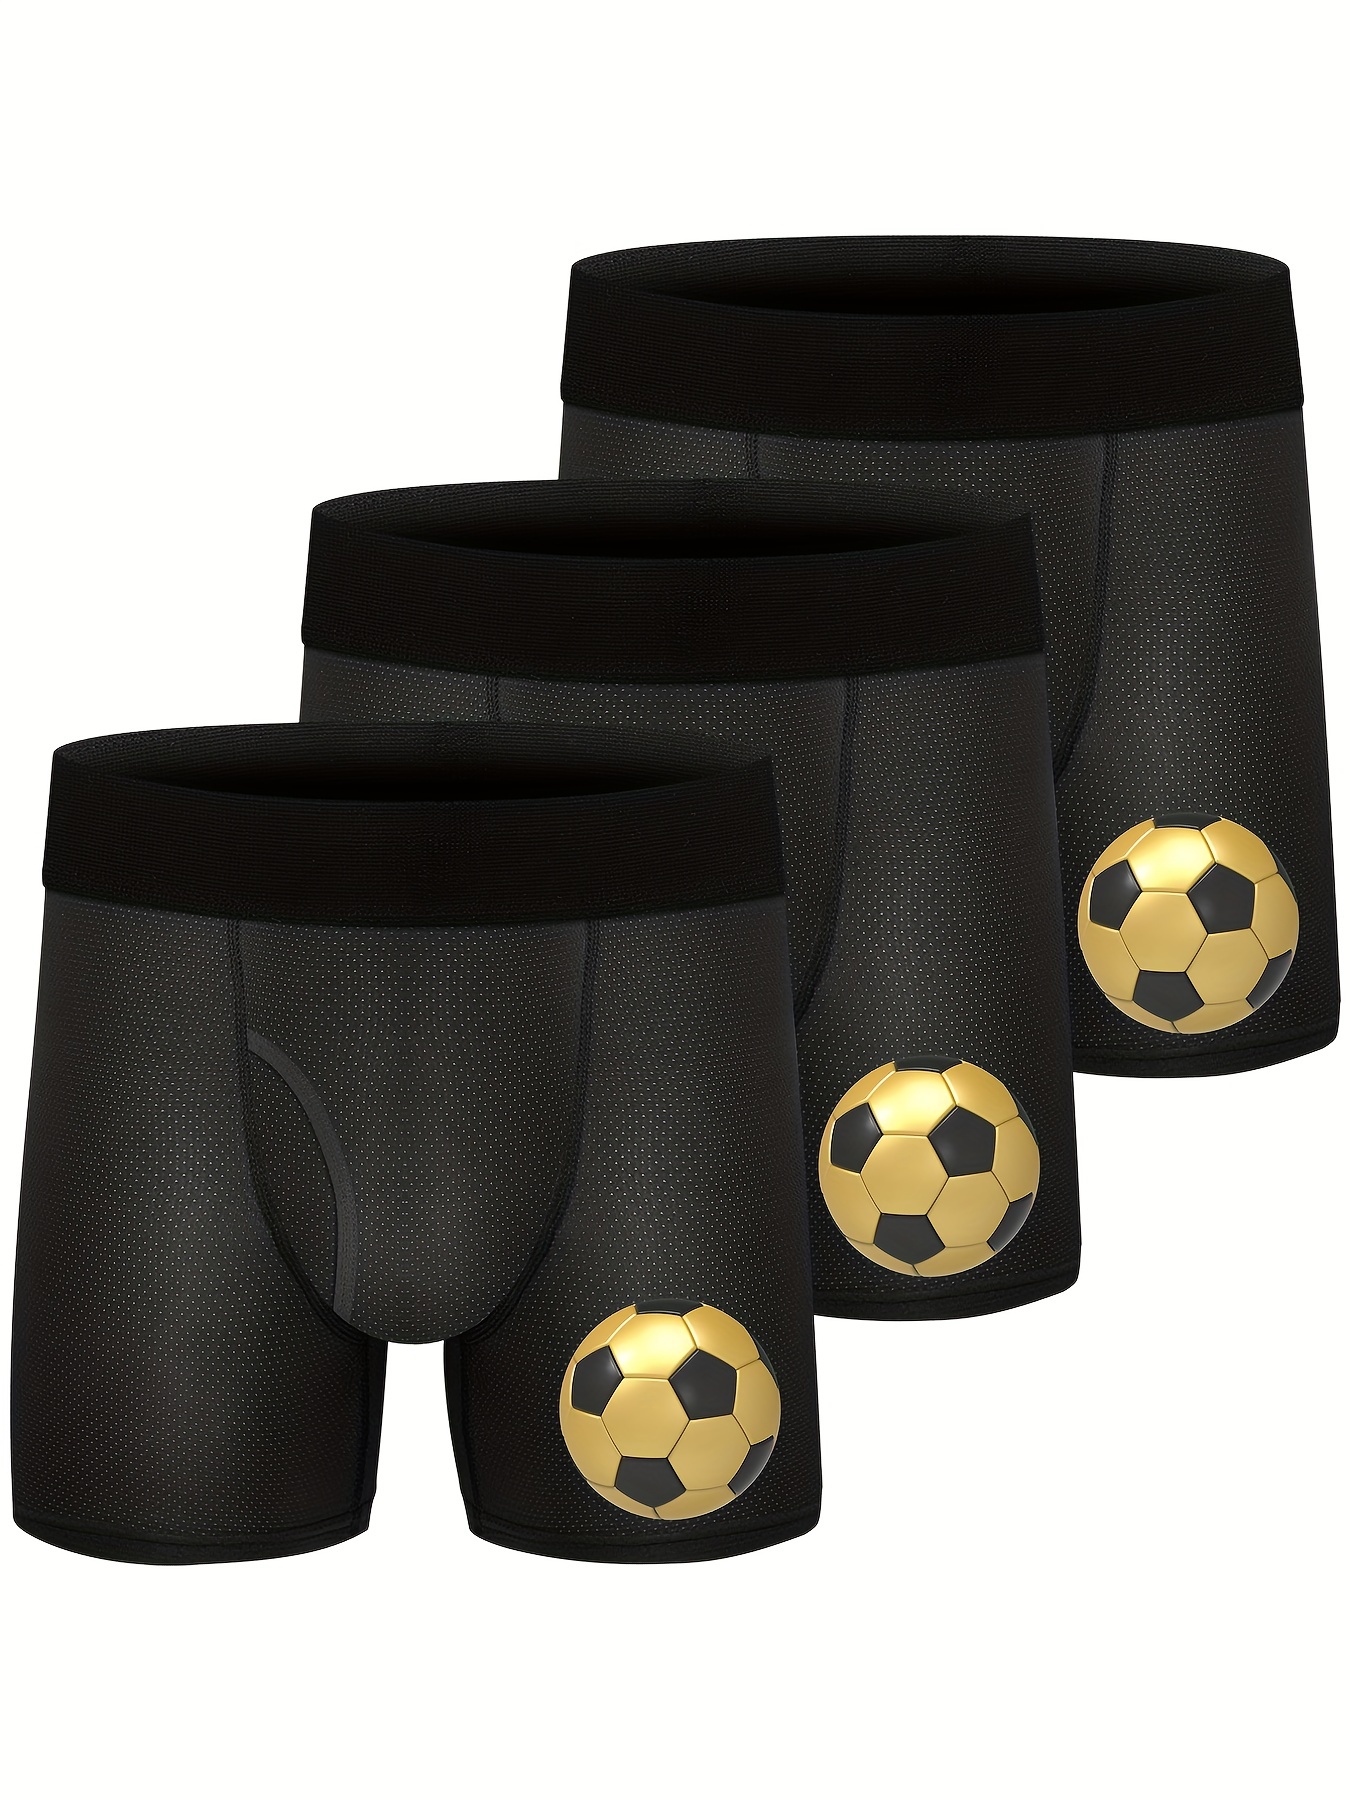  Soccer Football Player Men's Underwear Soft Boxer